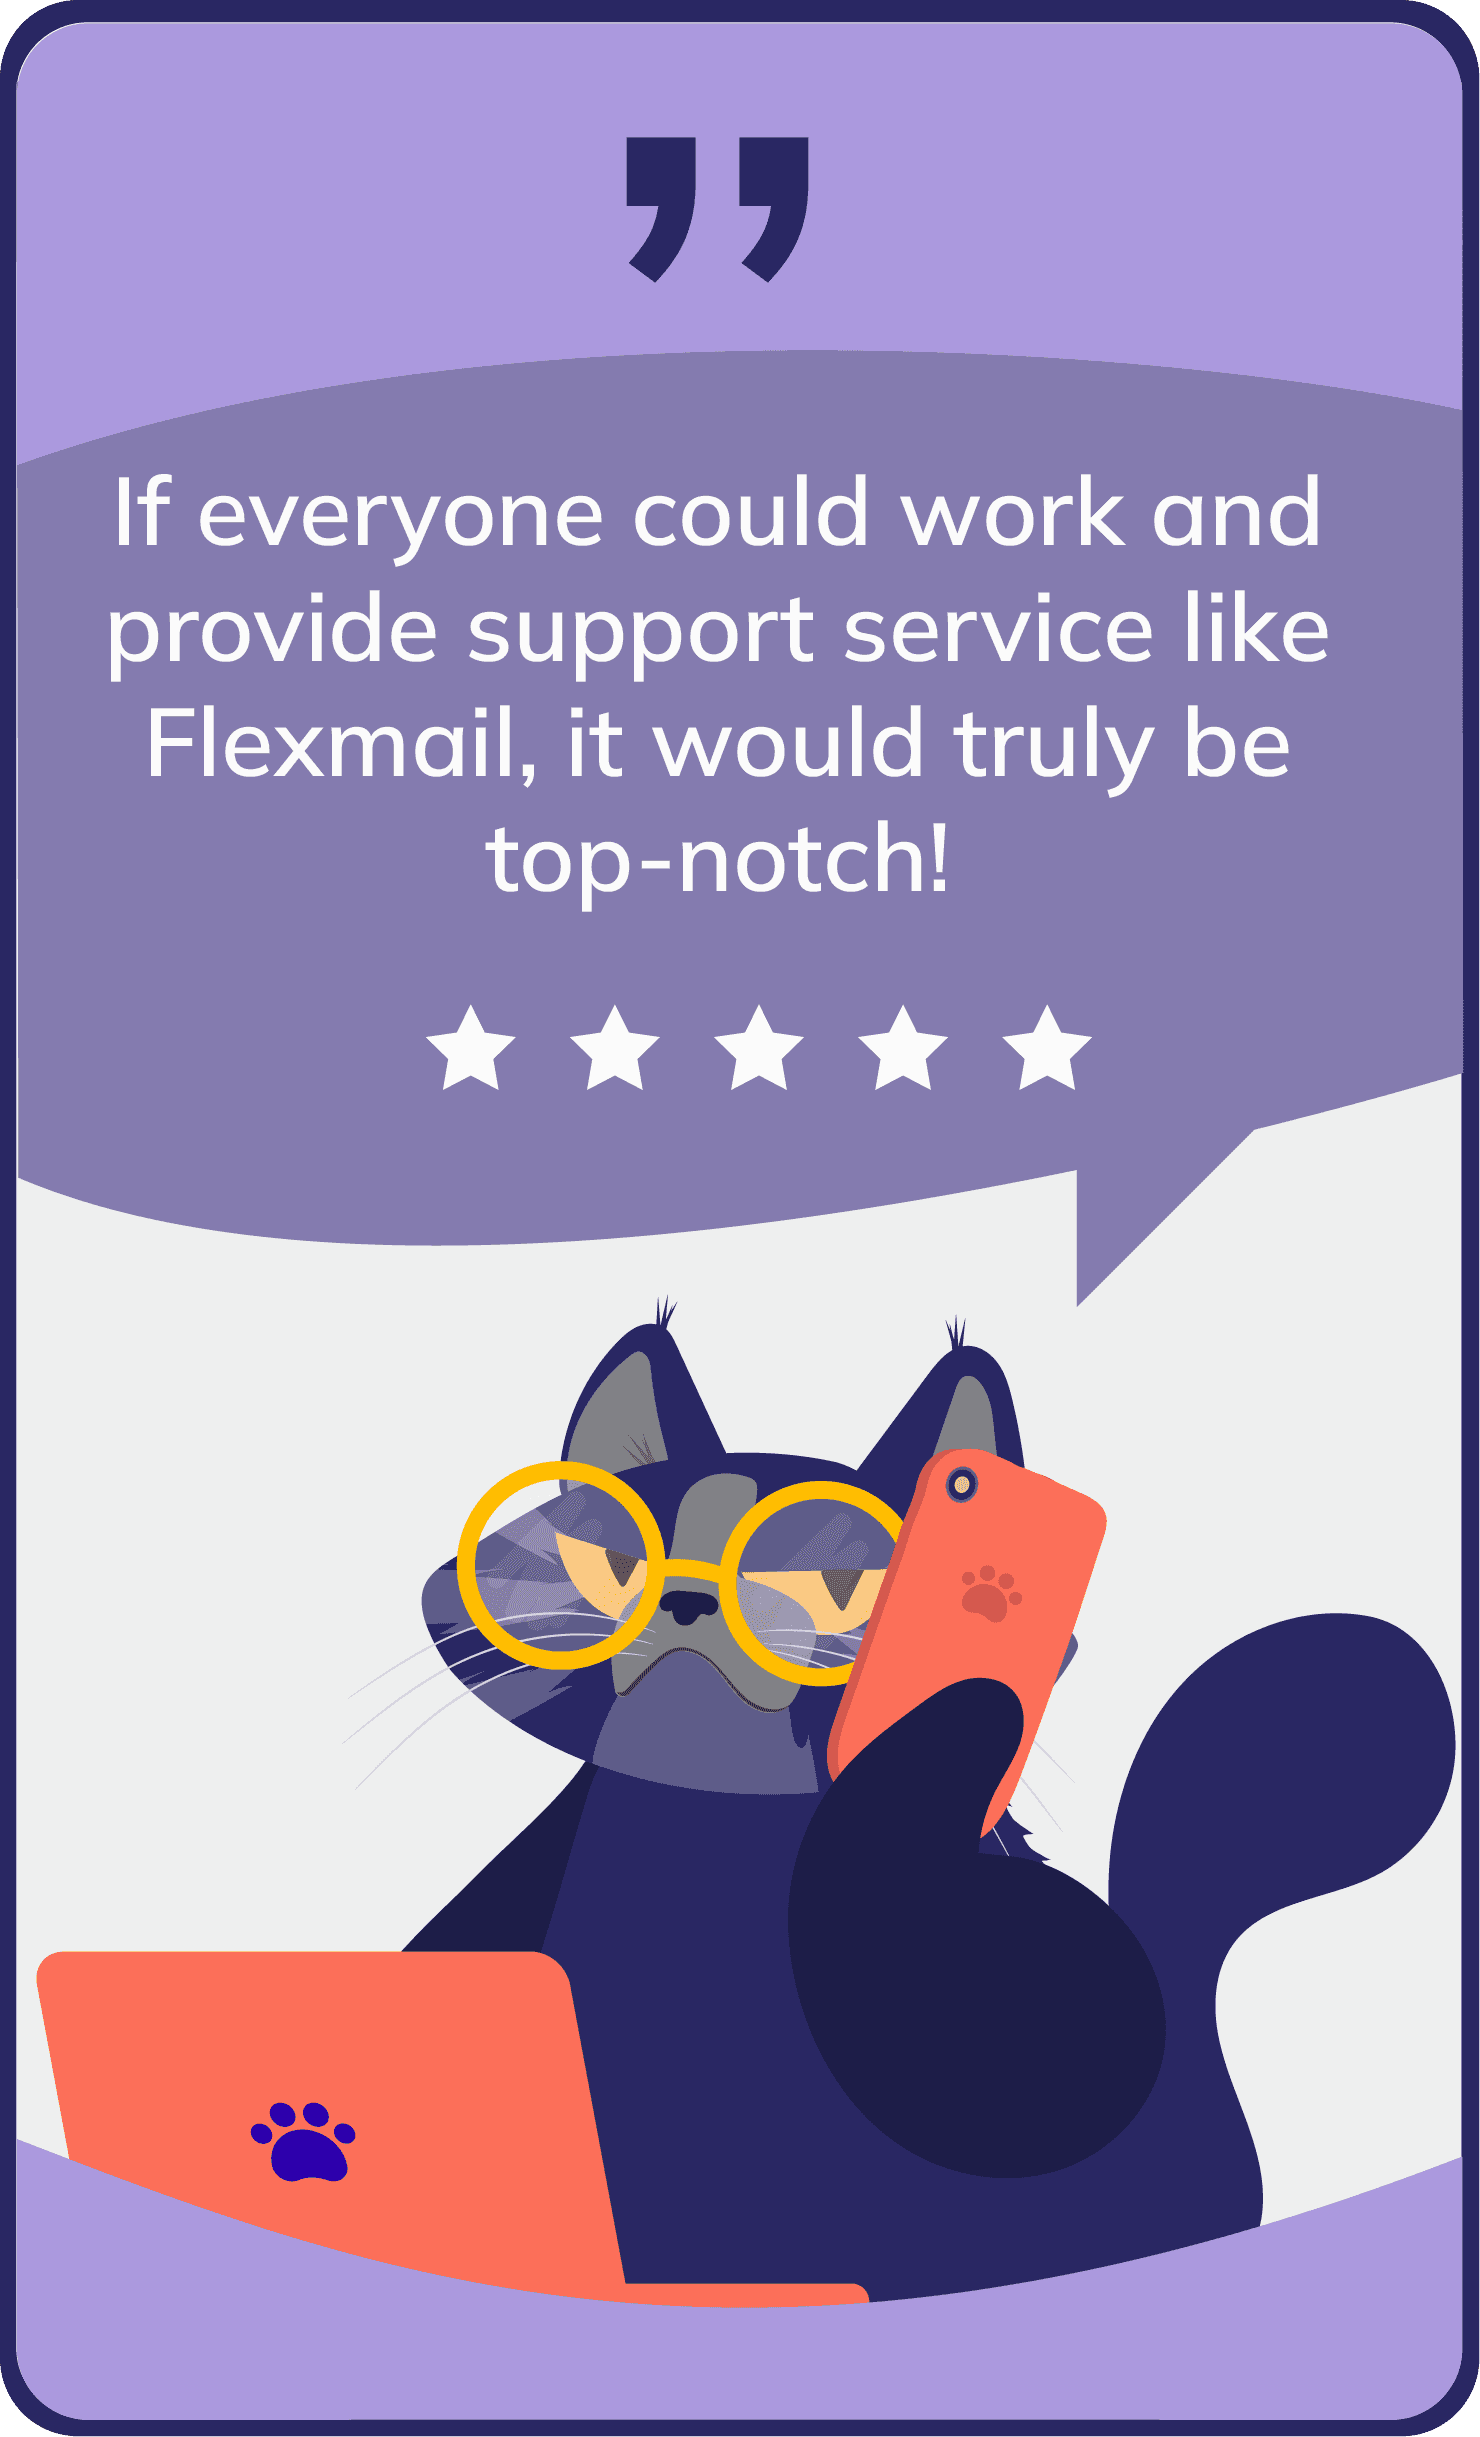 Flexmail's support team is supersnel en duidelijk